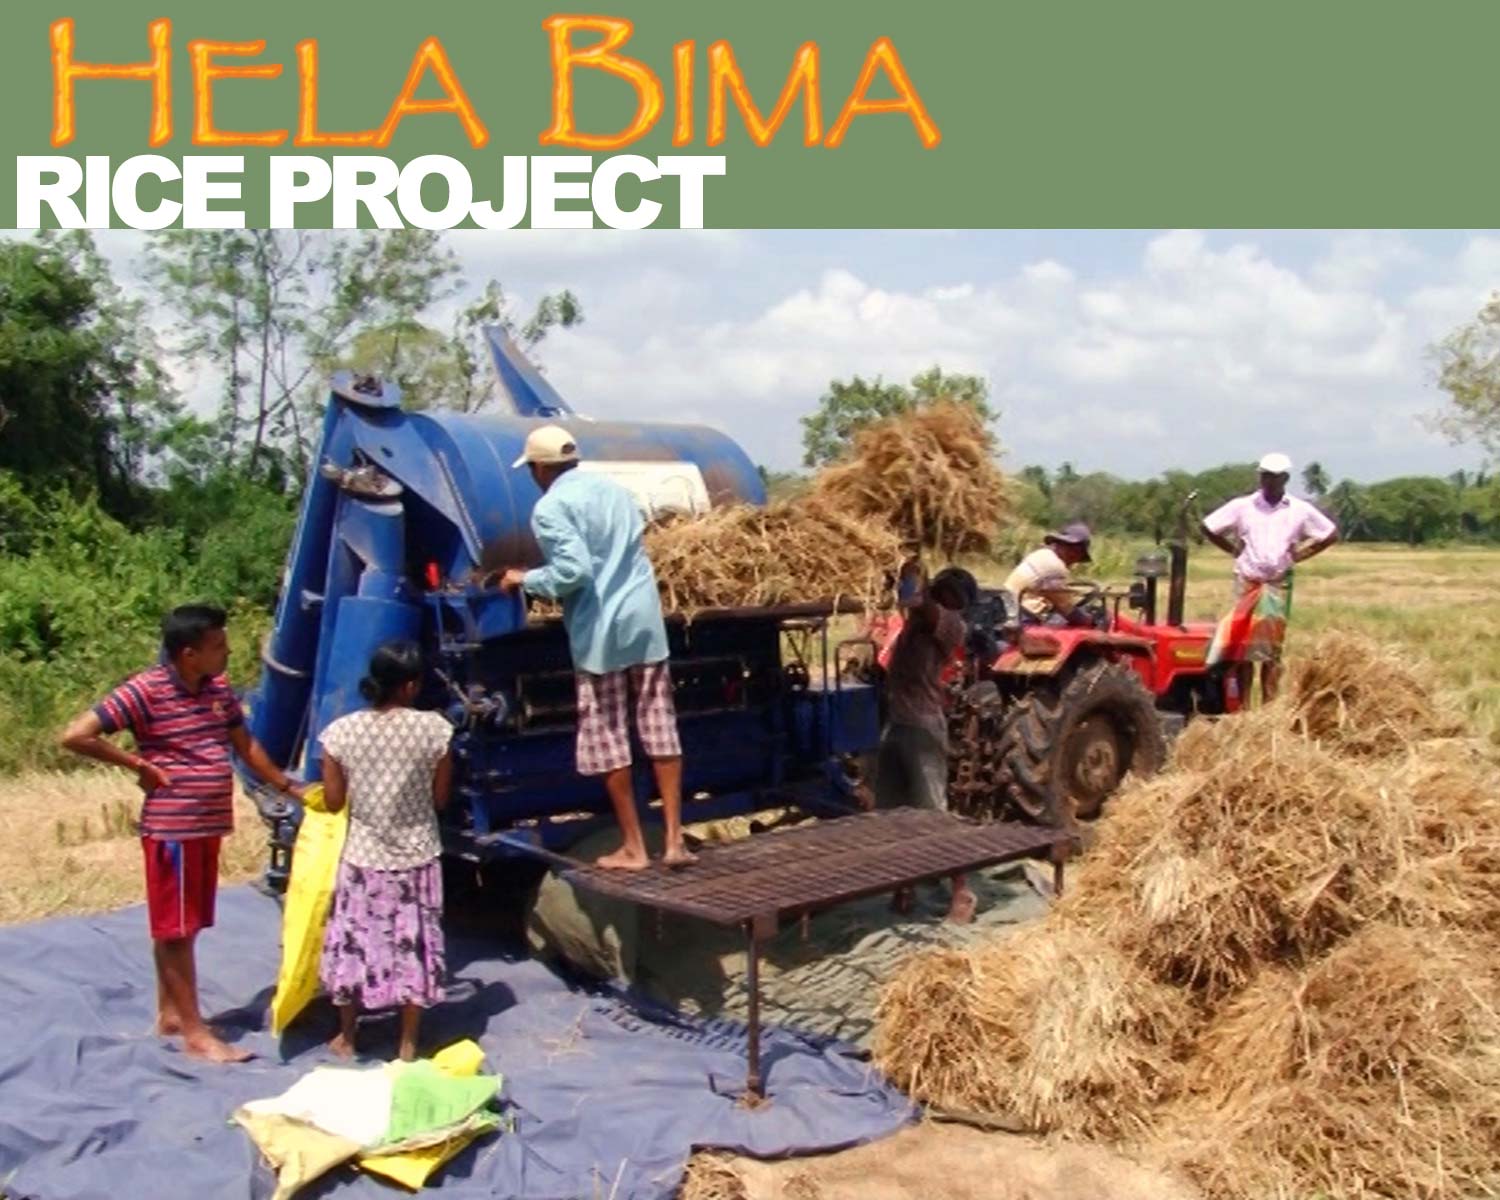 The Hela Bima Rice Project